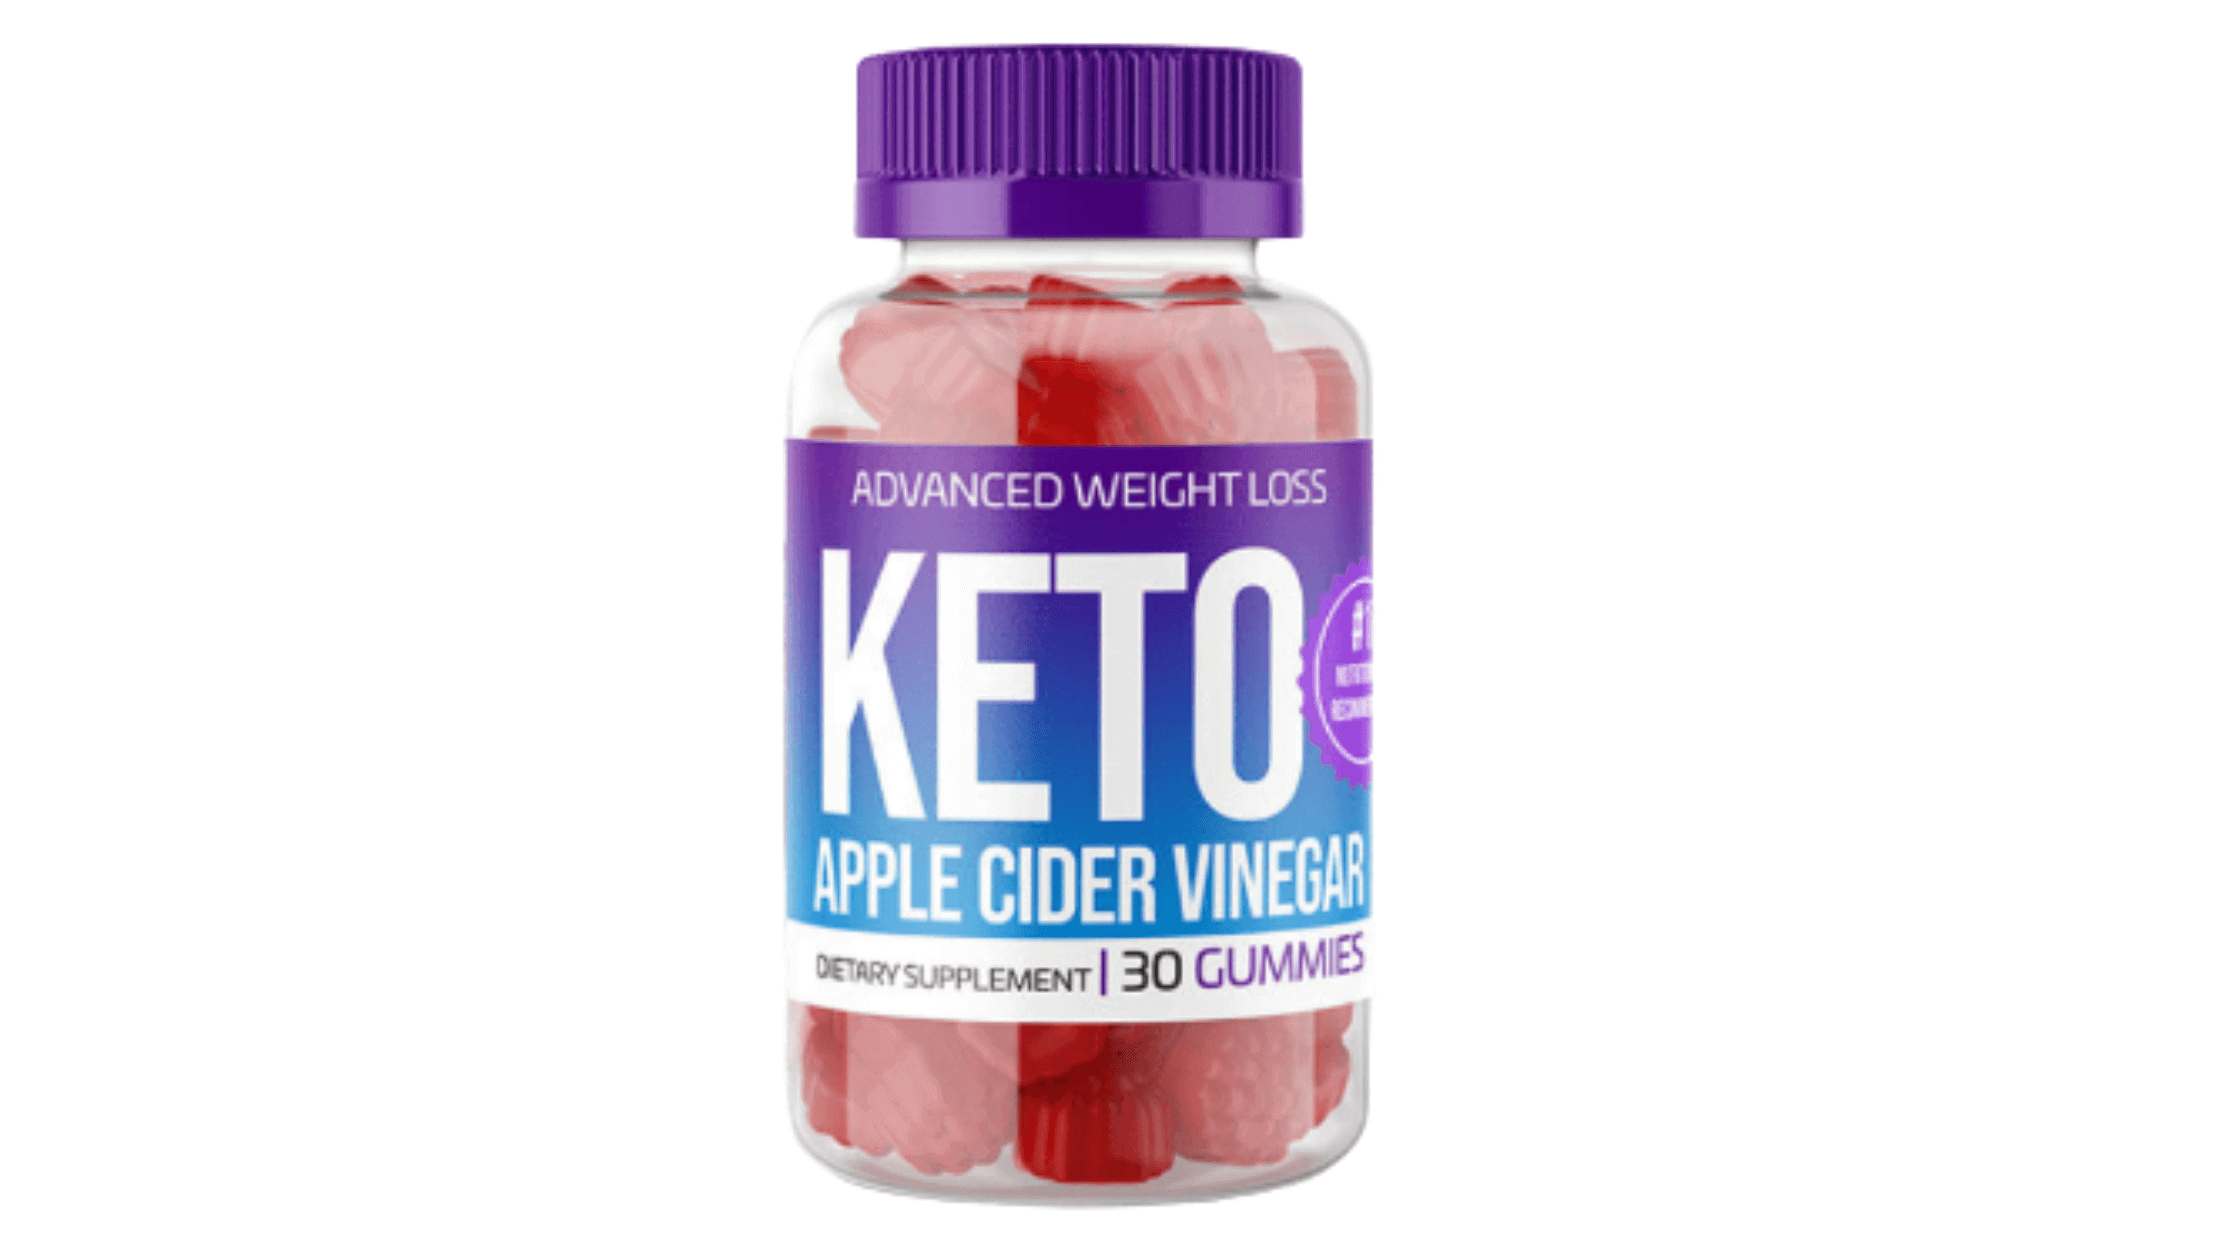 Apple Cider Vinegar Keto Gummies Reviews